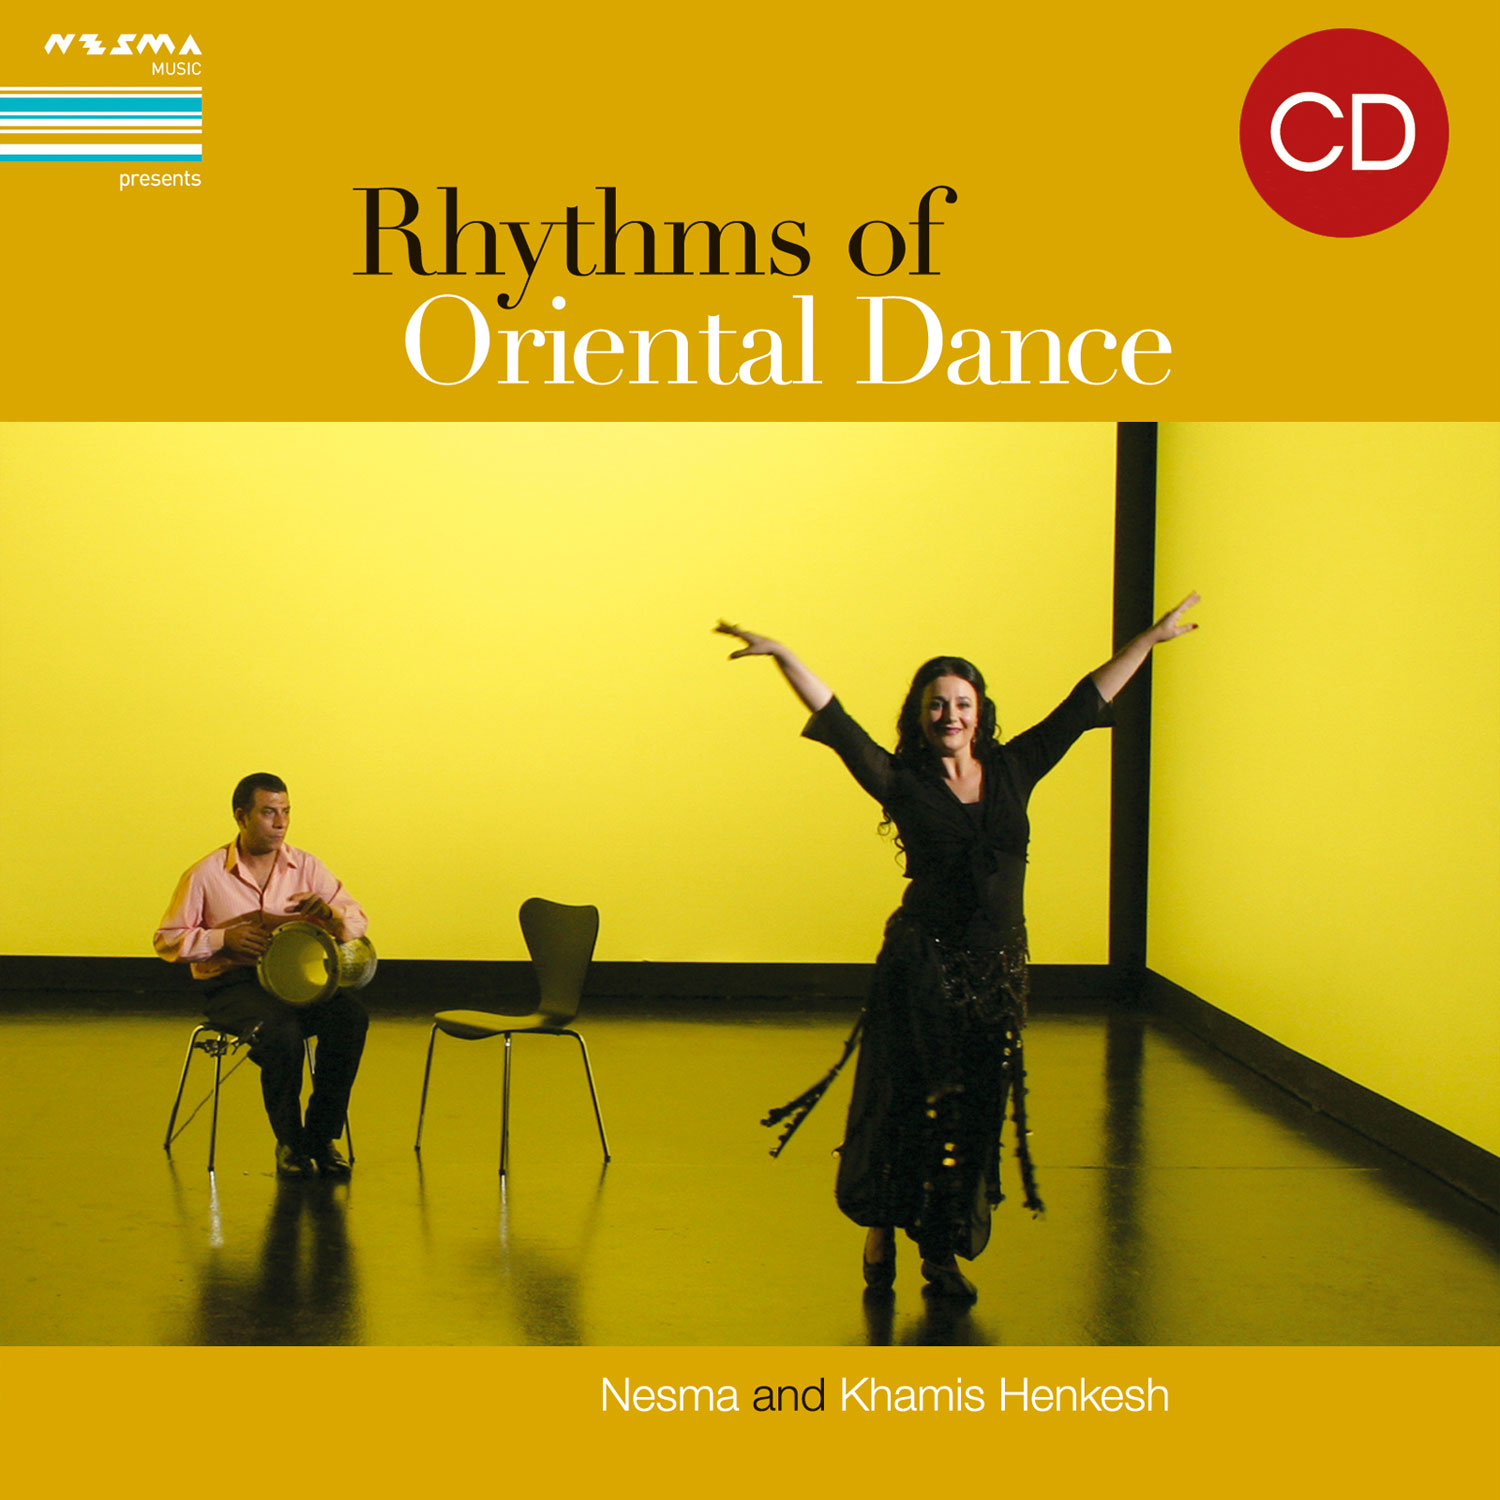 Rhythms of Oriental Dance DVD